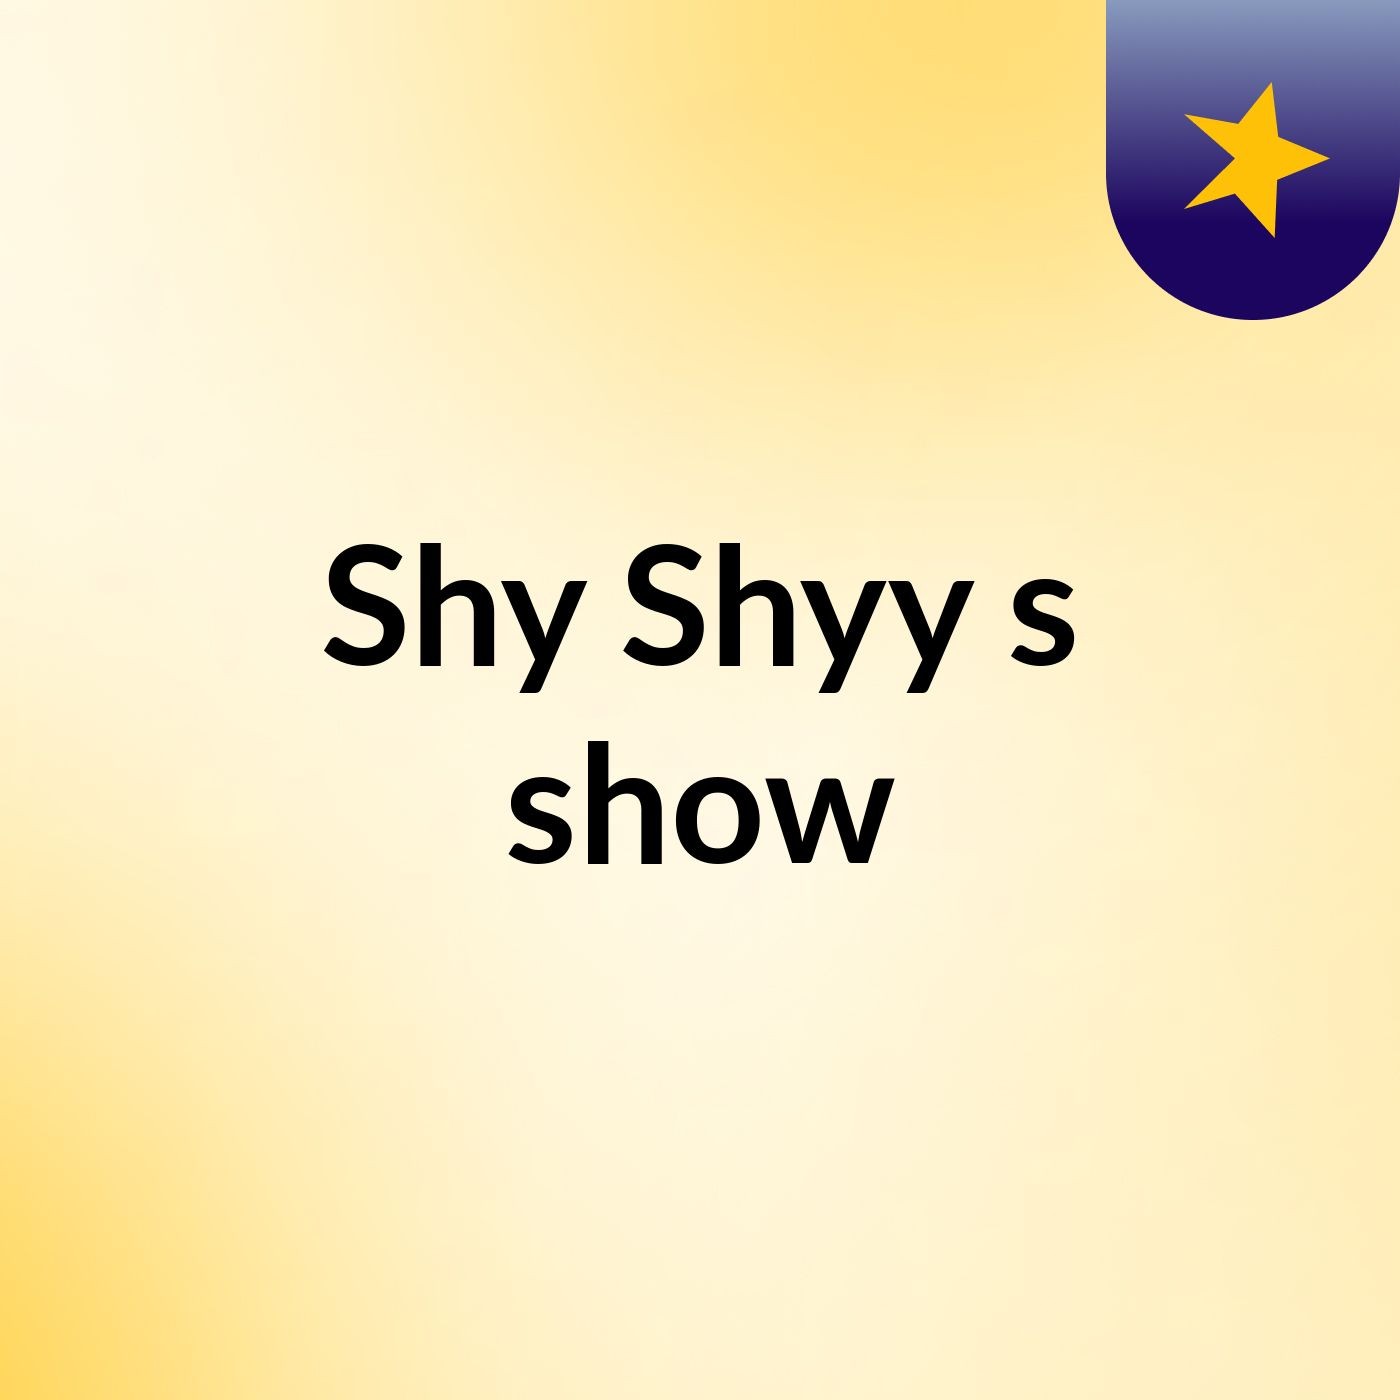 Episode 3 - Shy Shyy's show